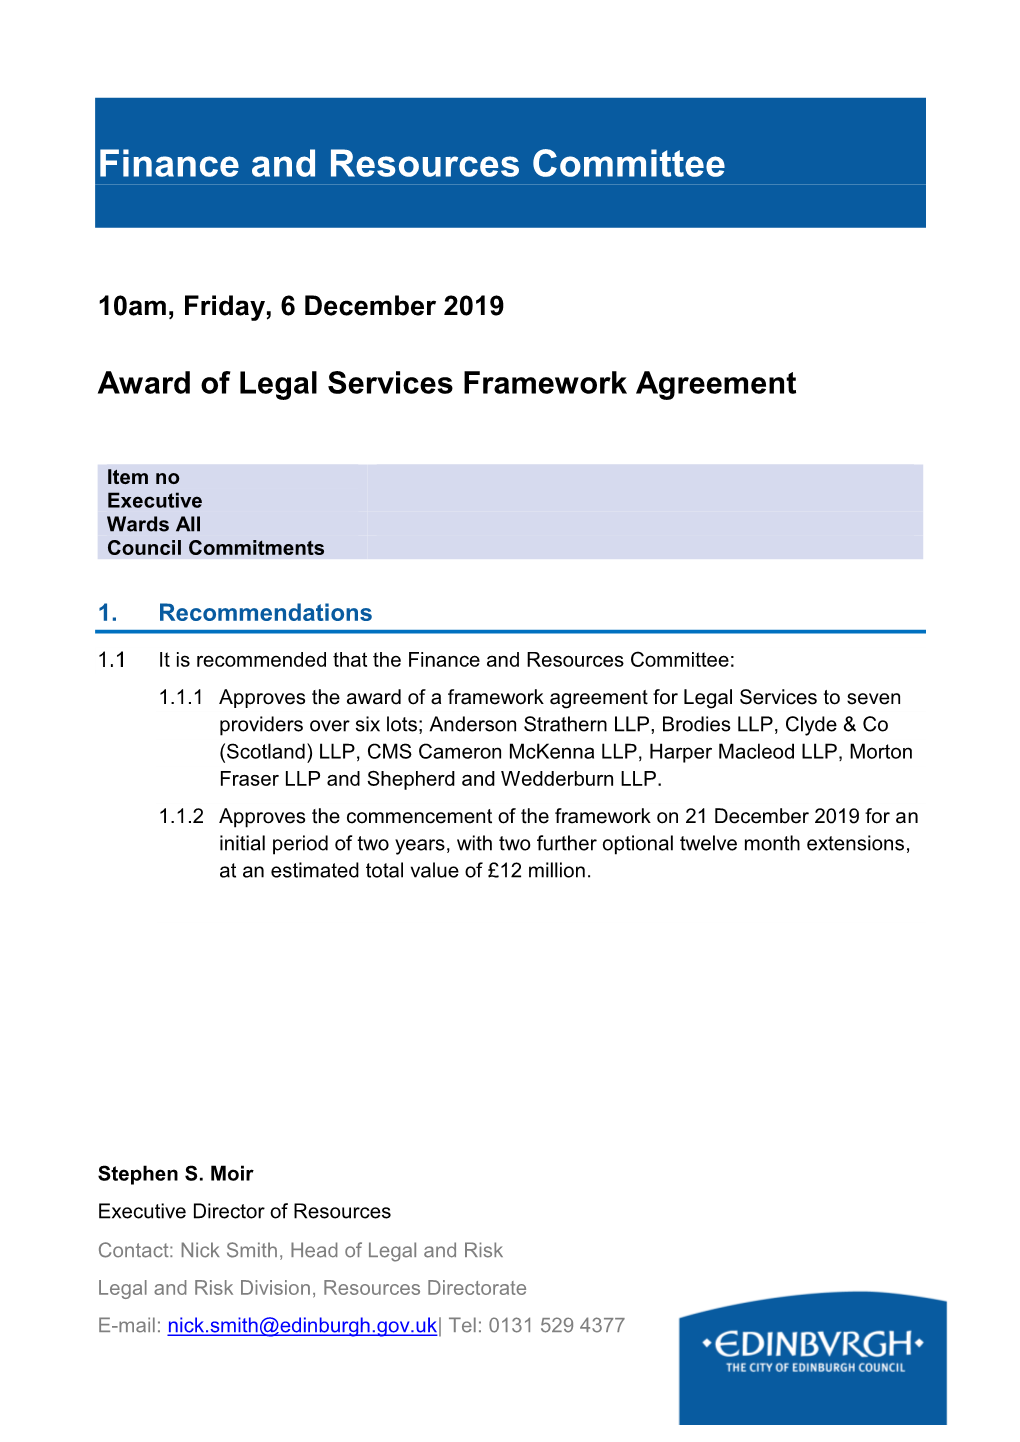 Award of Legal Services Framework Agreement